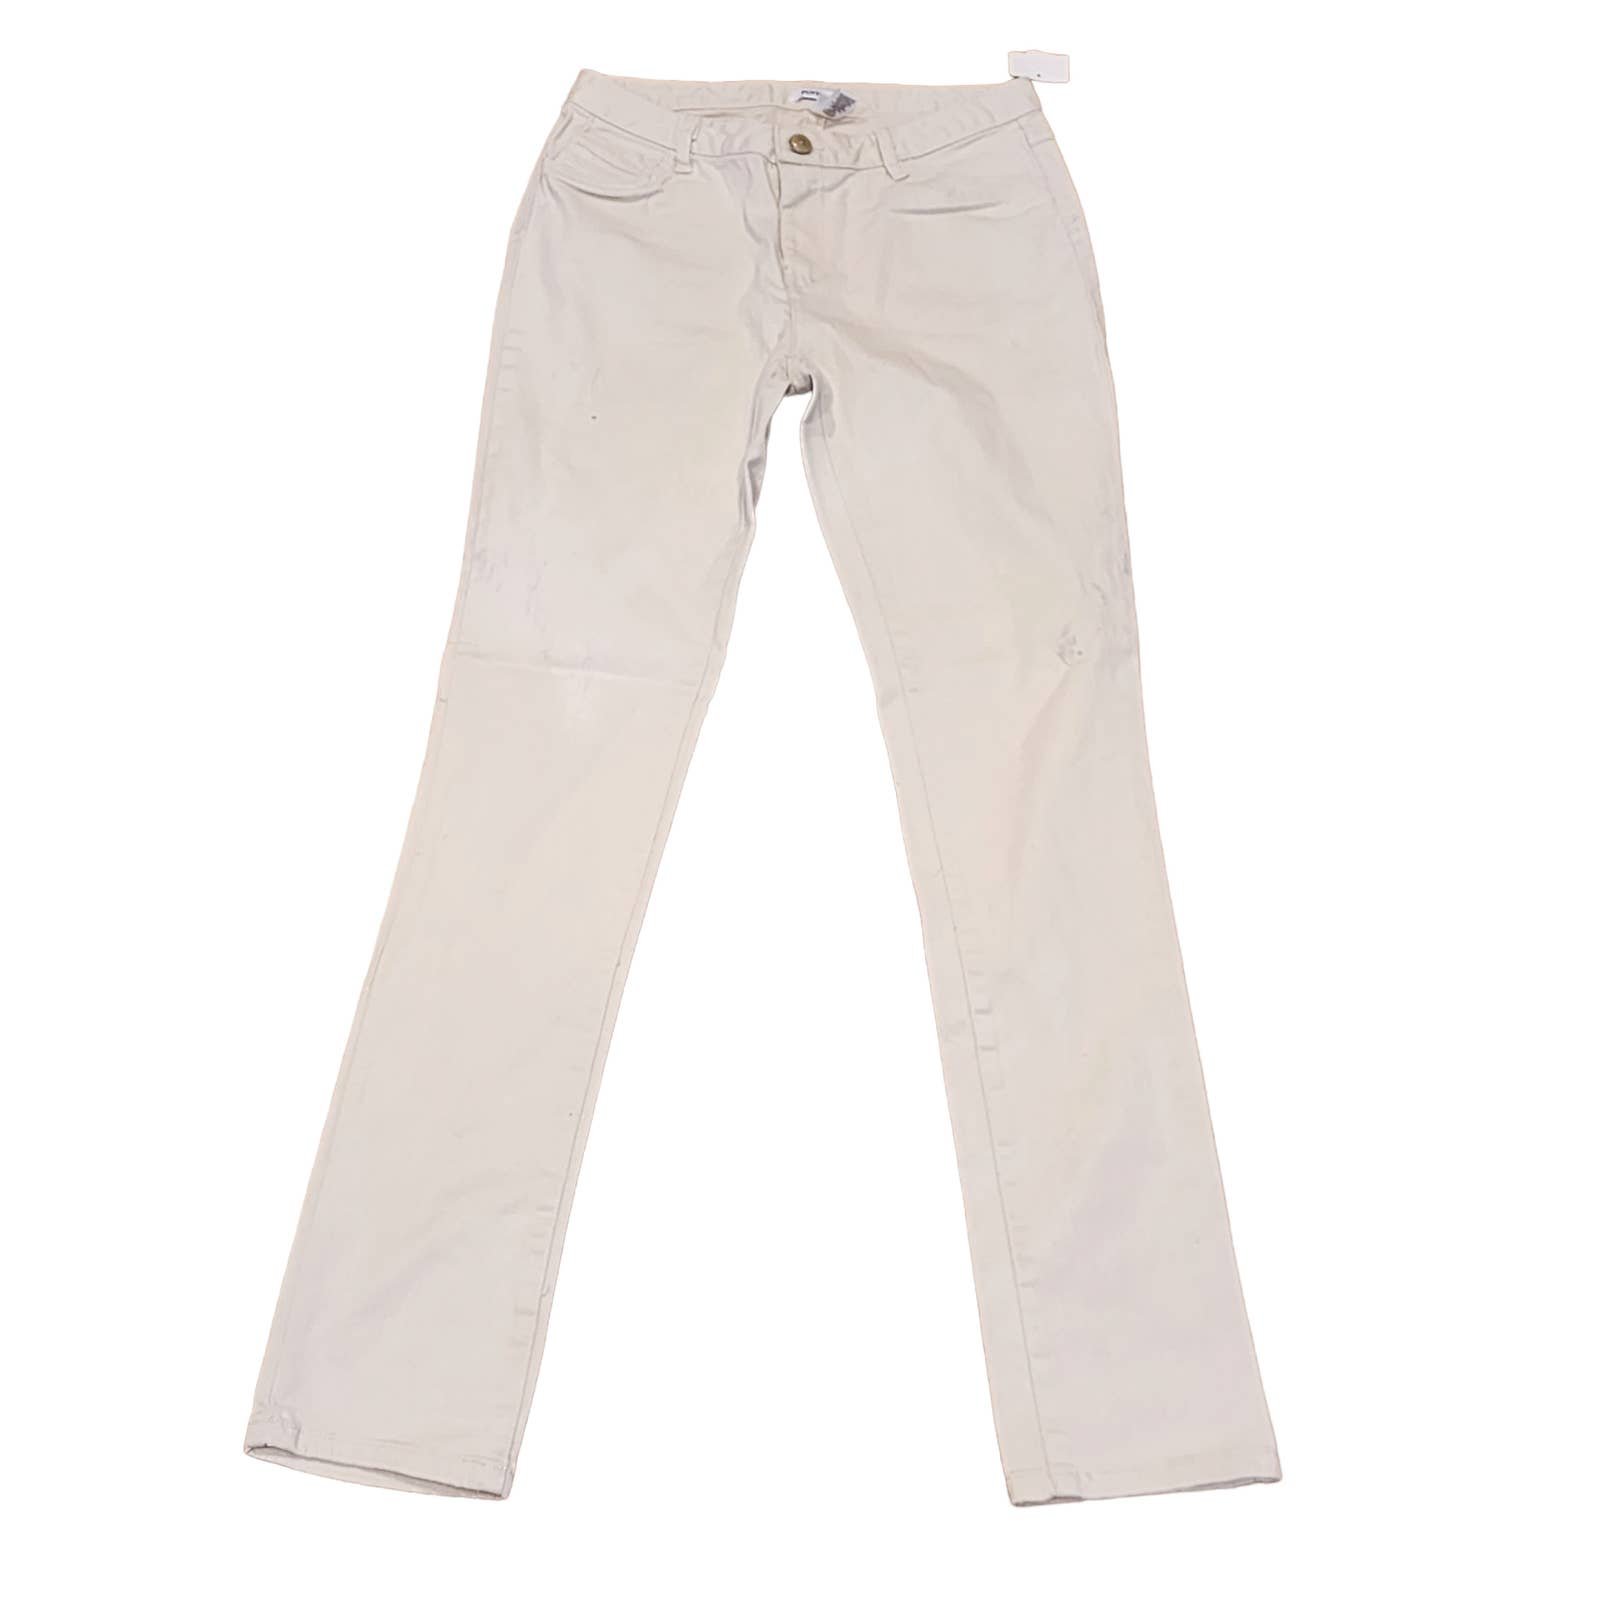 large selection Puntodue Cream Skinny Jeans Size 4 jDZ5